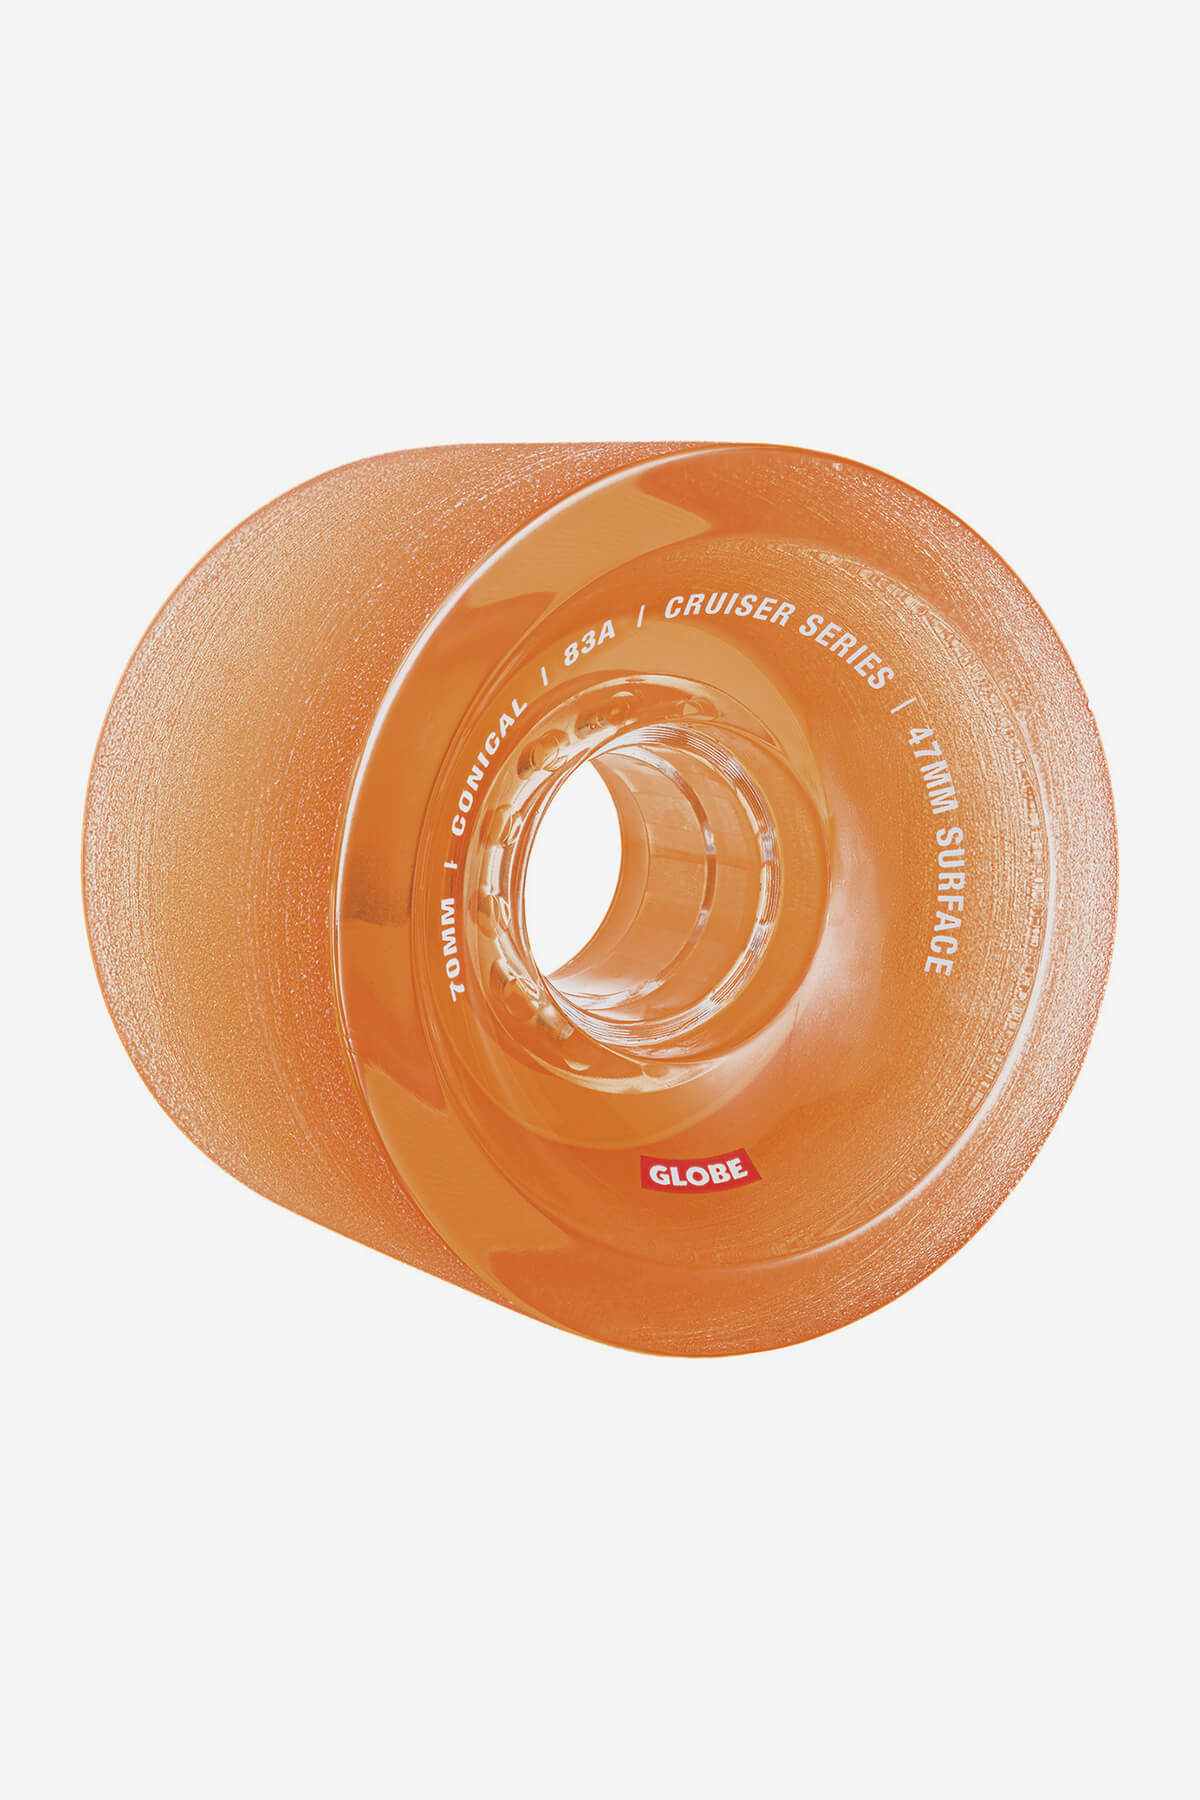 conical cruiser skateboard wheel 70mm